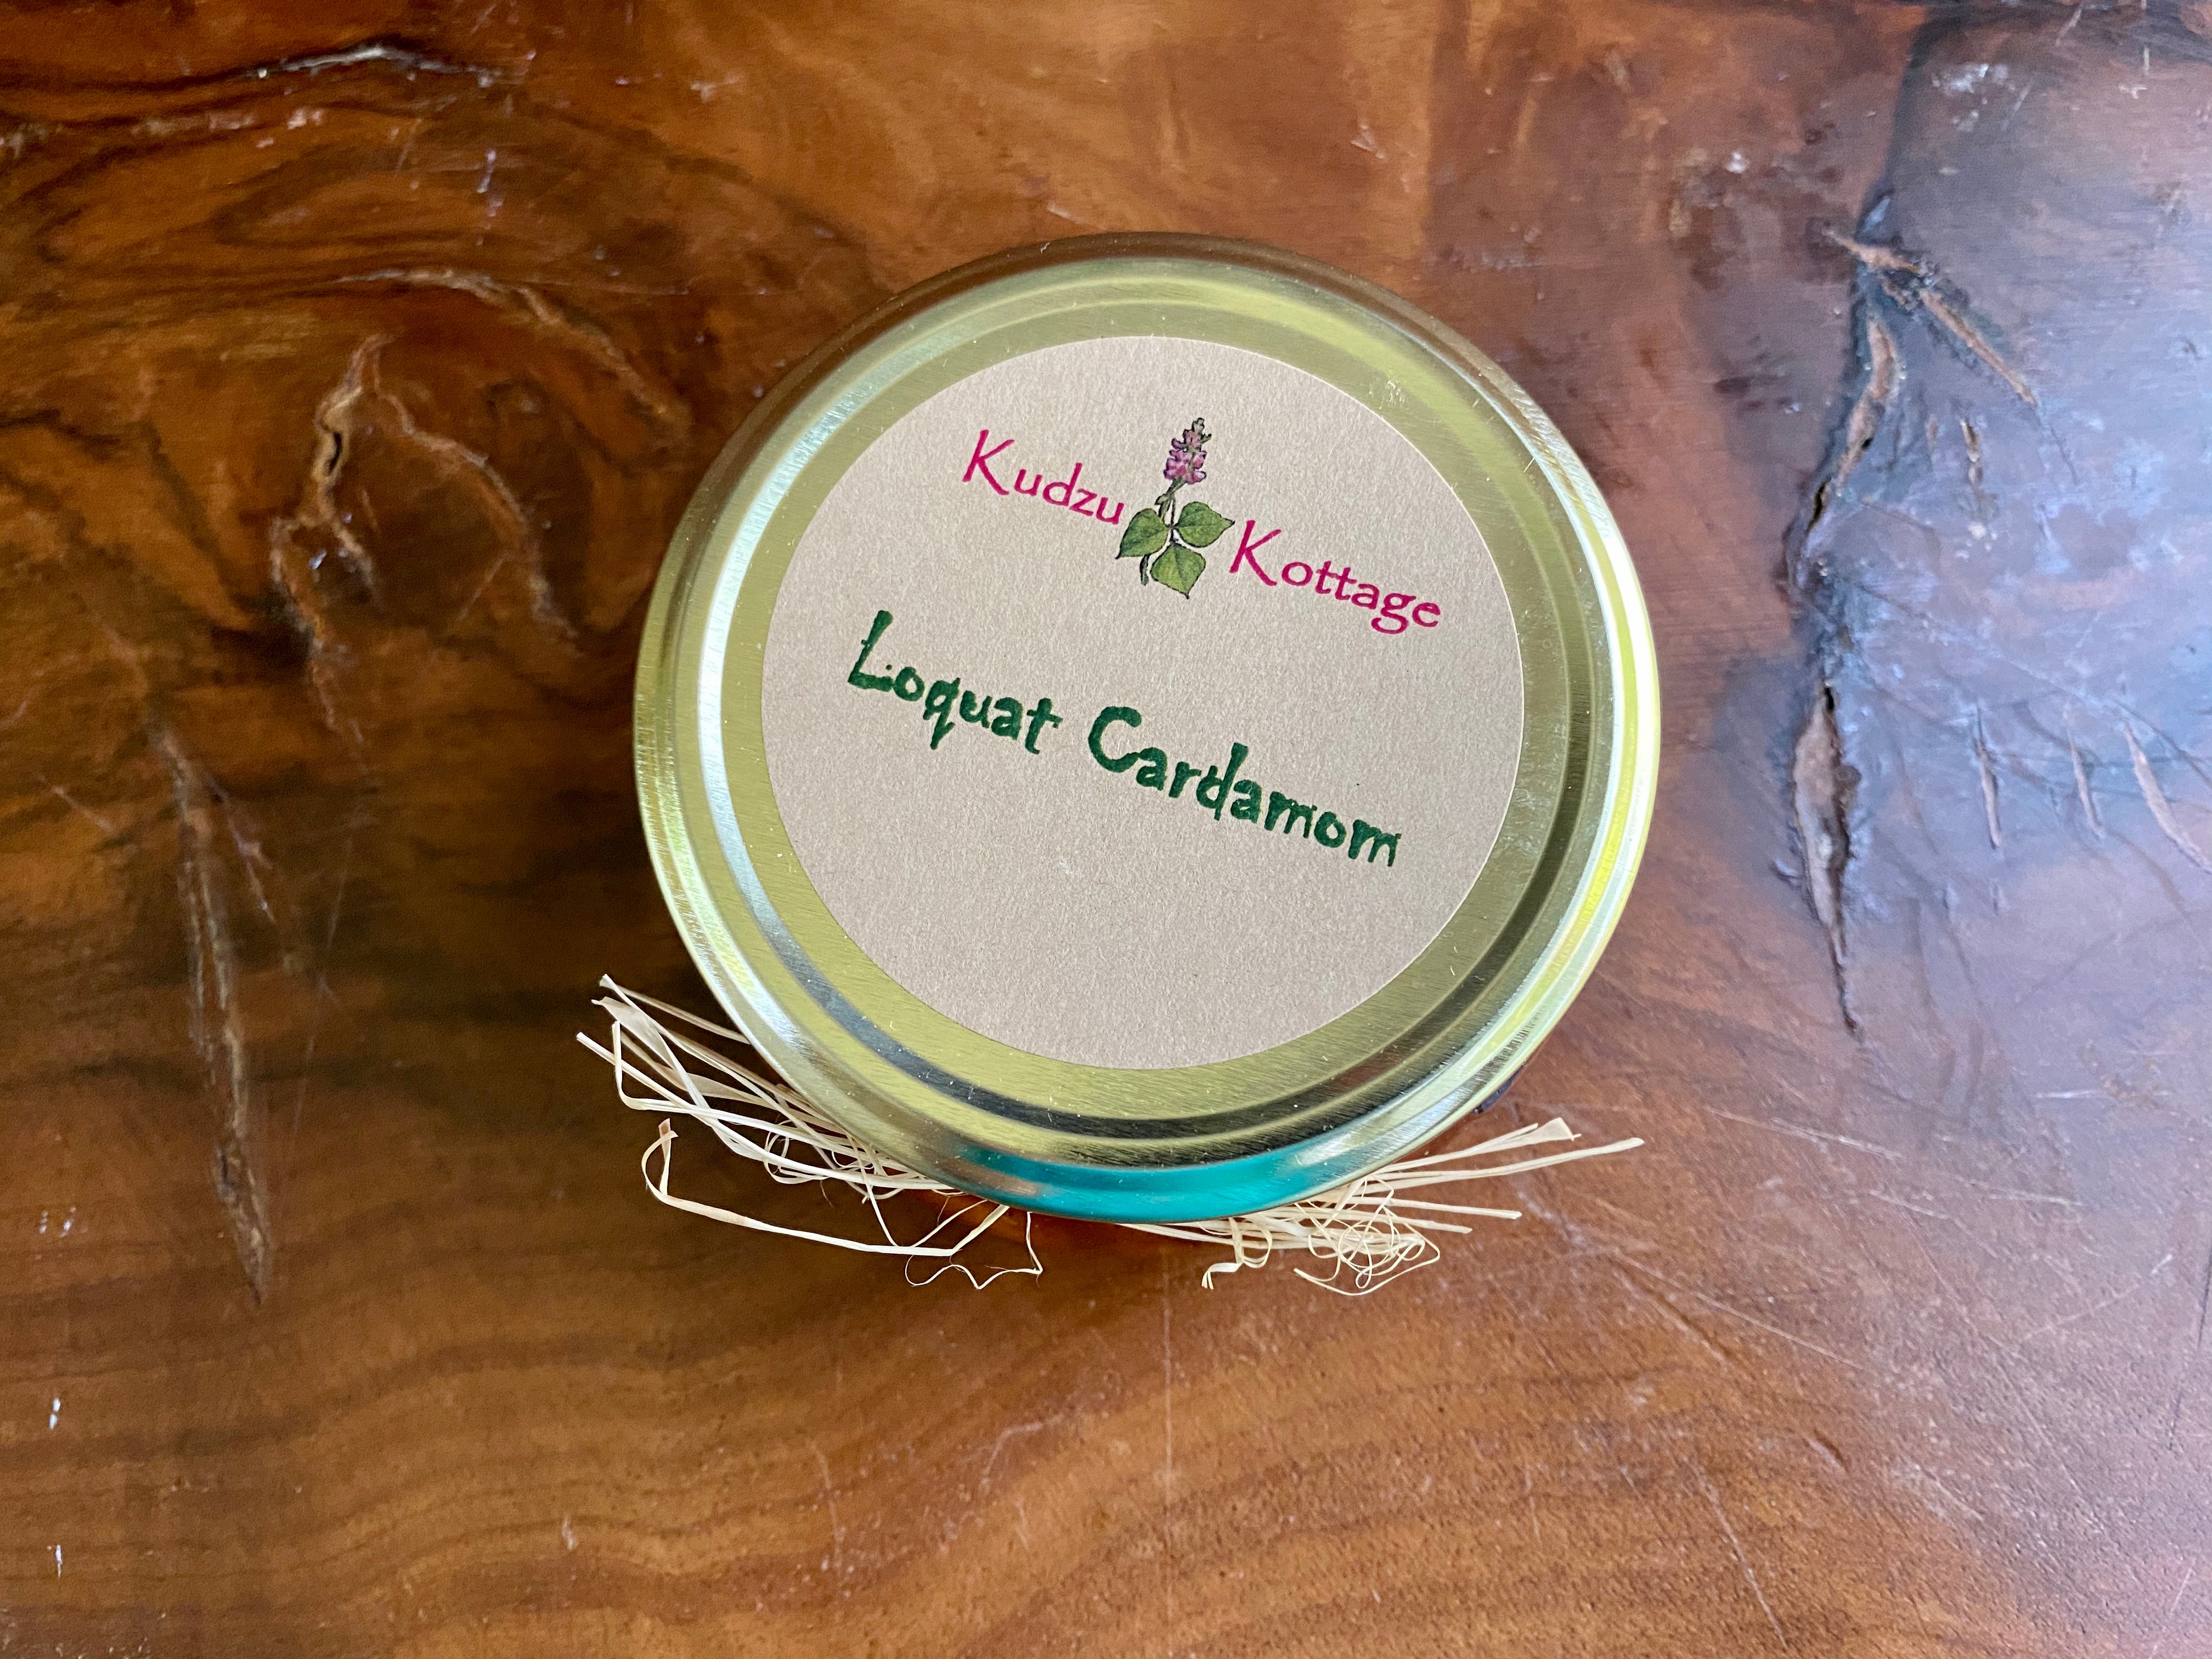 Loquat Cardamom